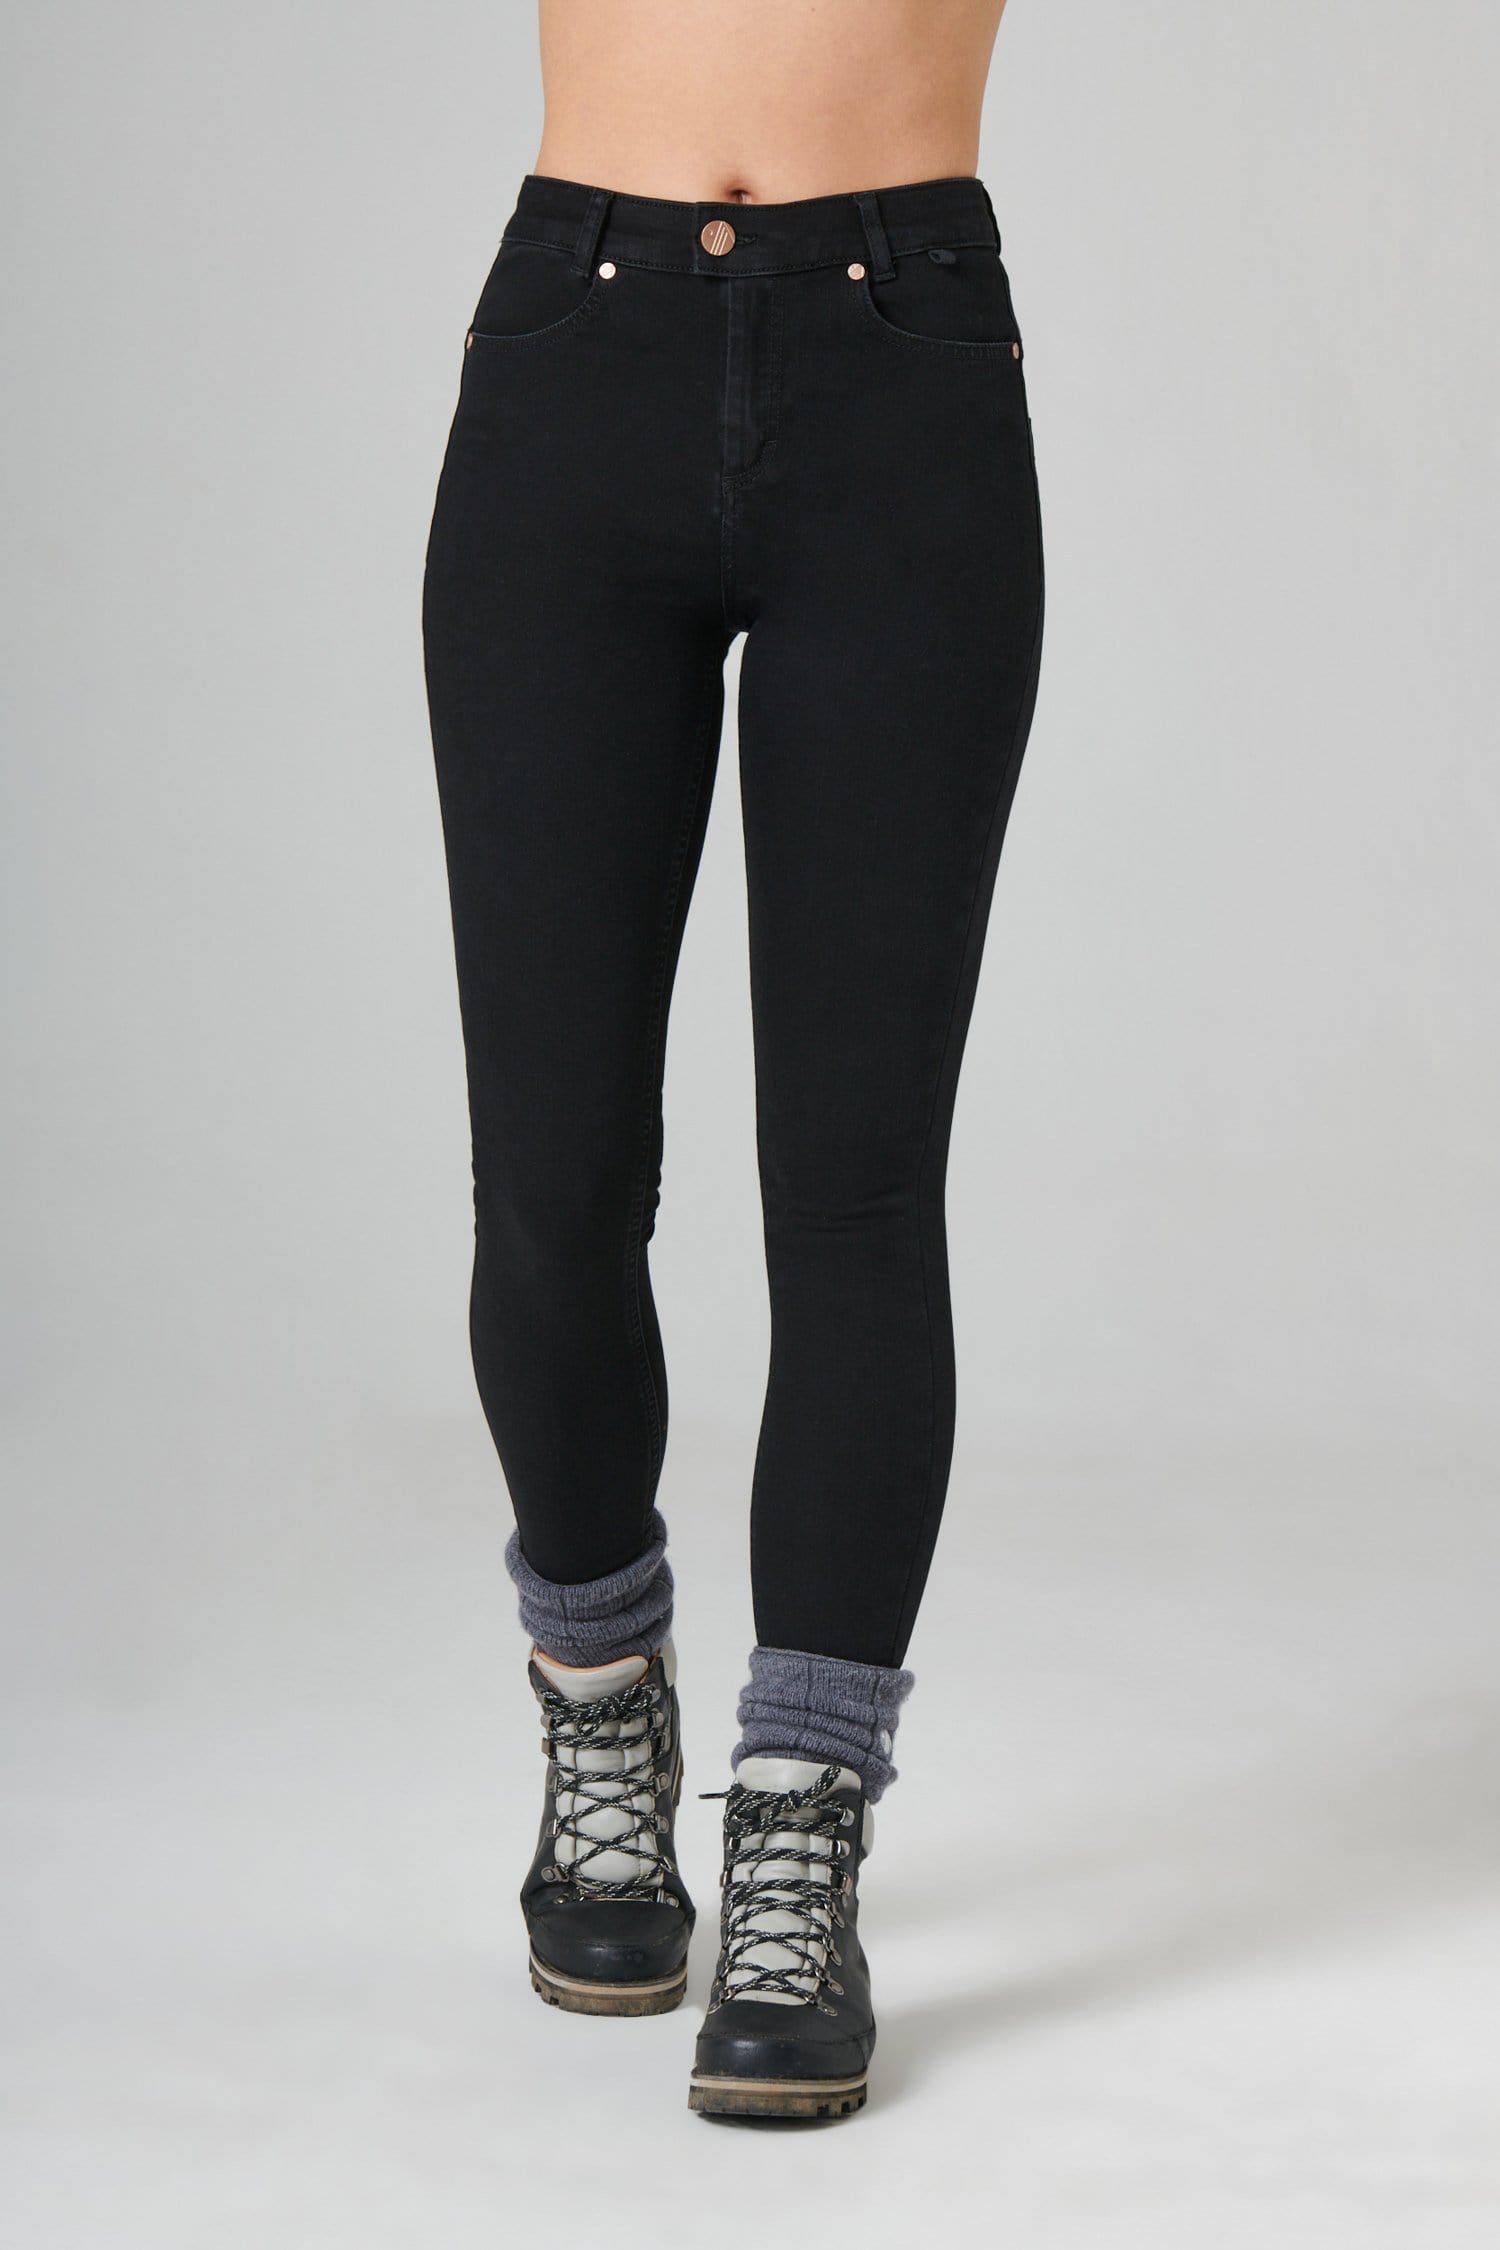 The Skinny Outdoor Jeans - Black Denim - 24r / Uk6 - Womens - Acai Outdoorwear